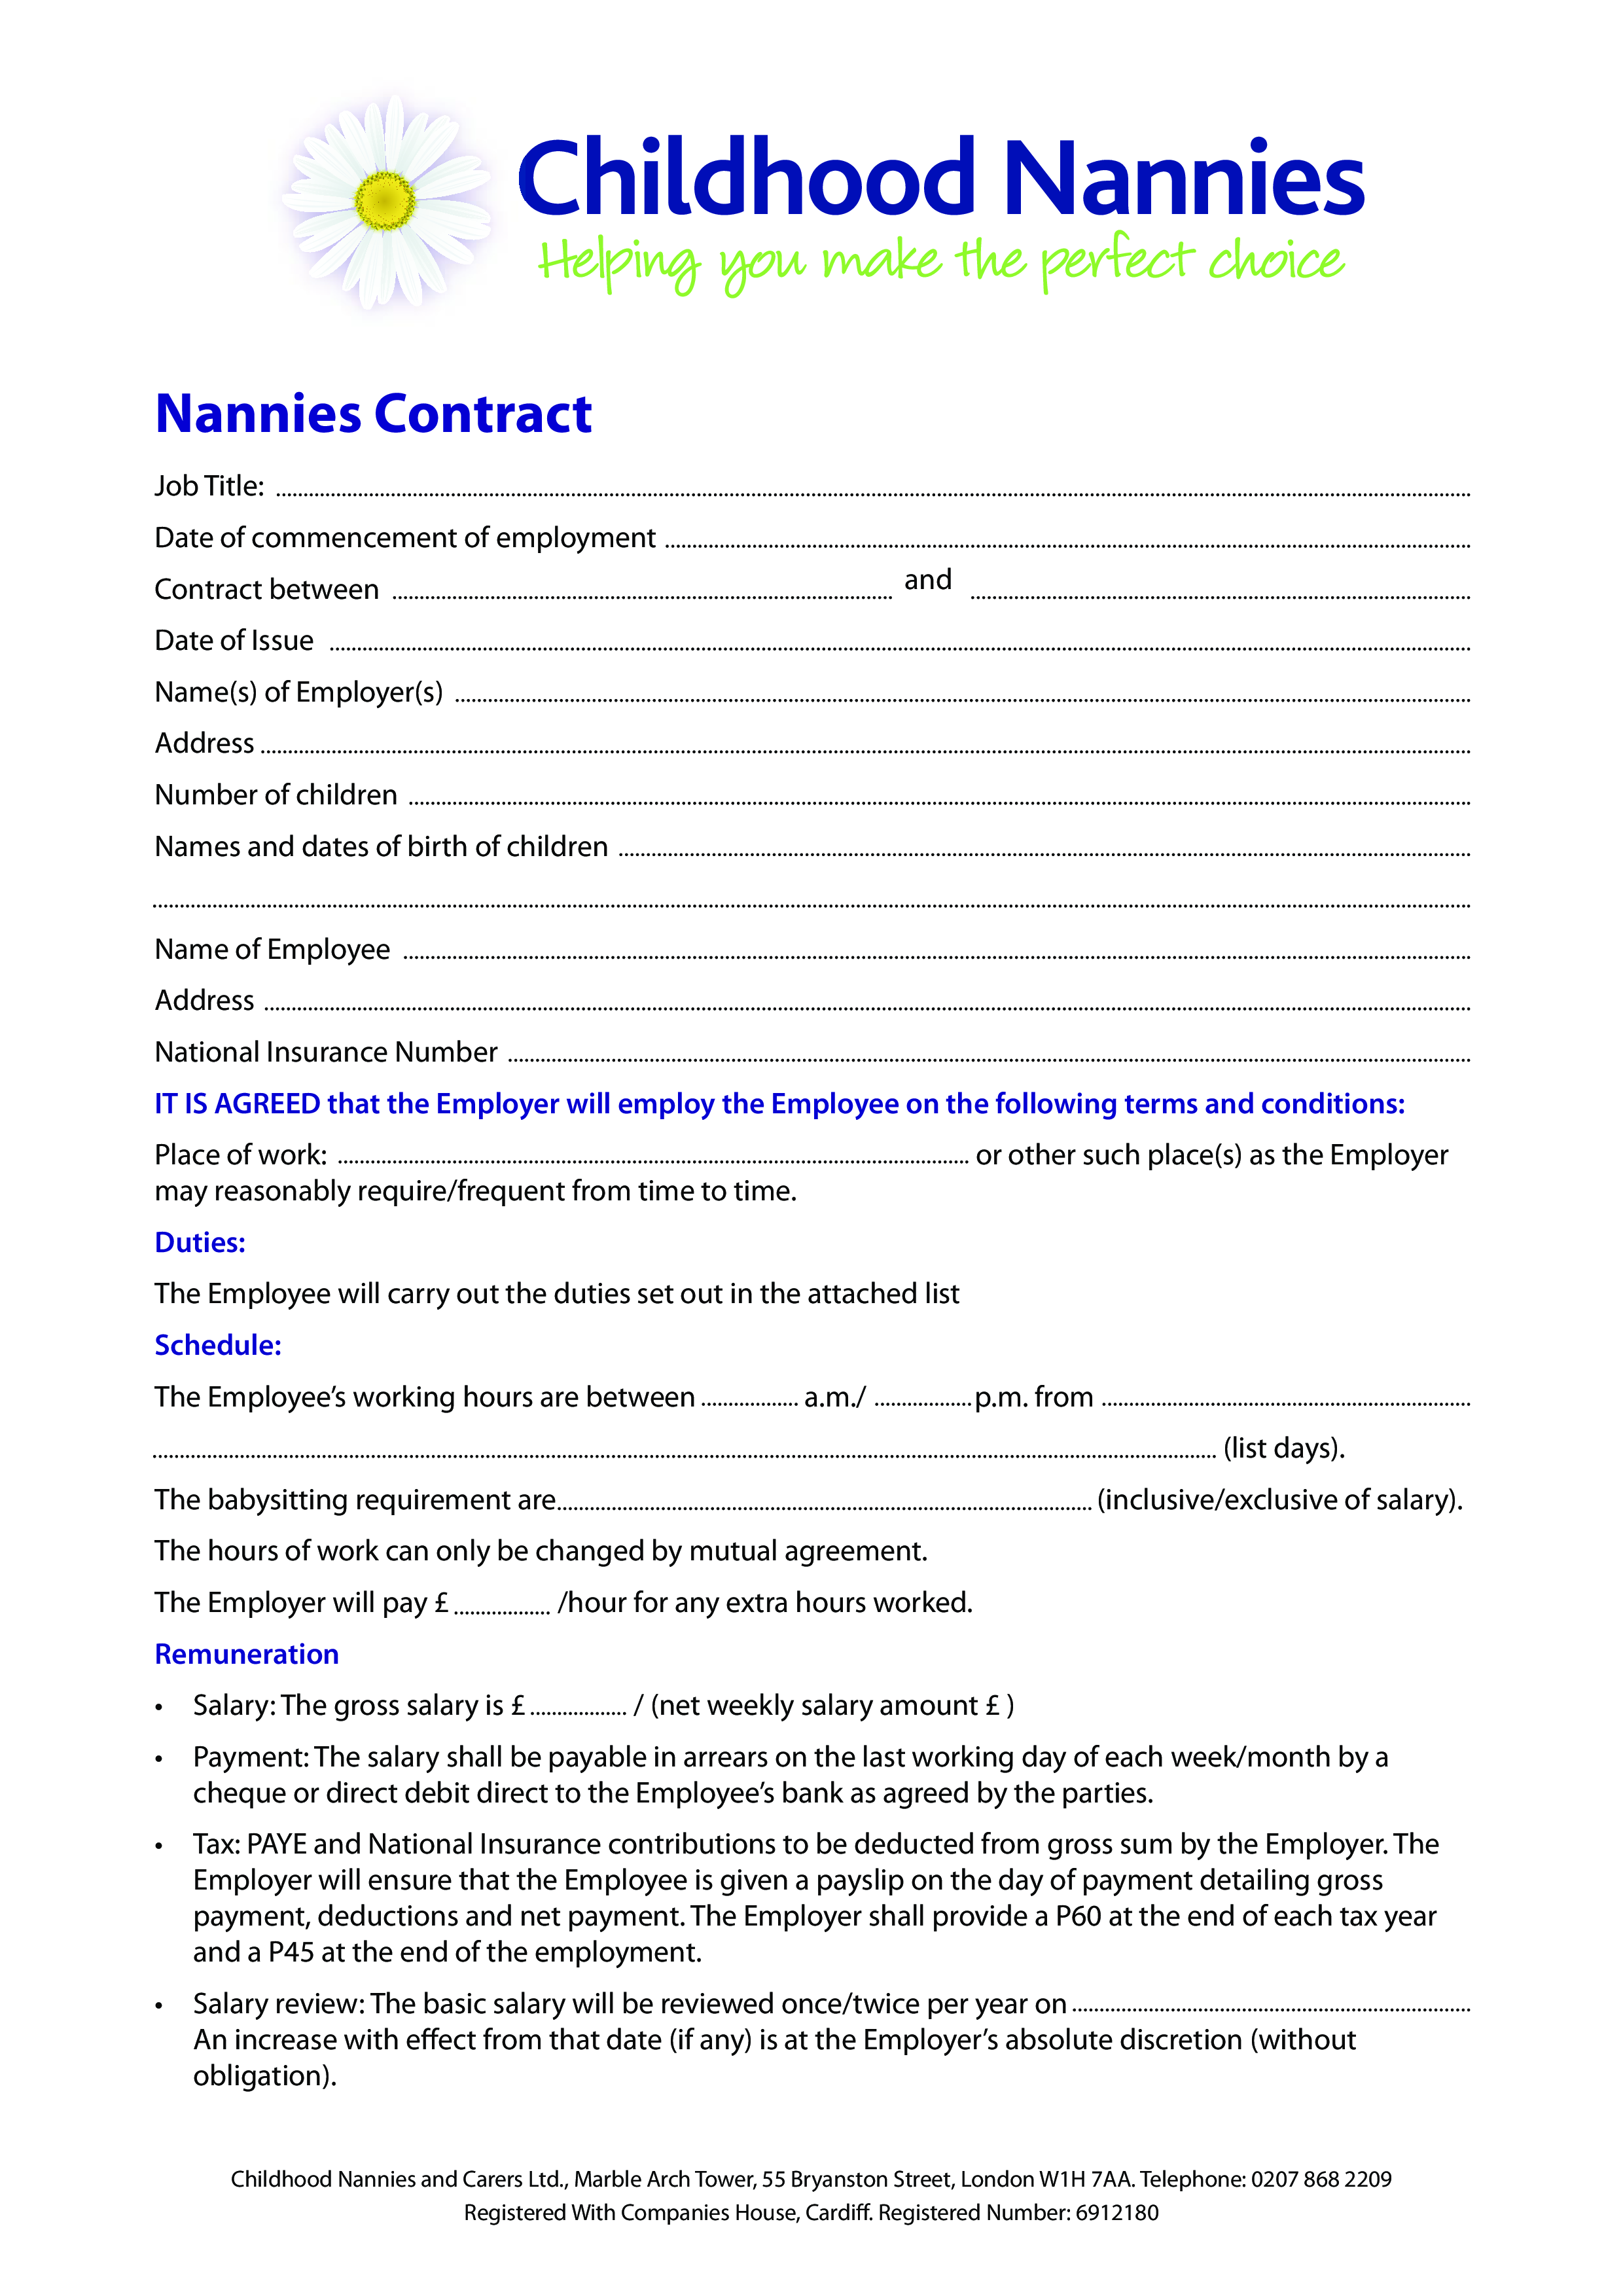 Childhood Nanny Contract main image